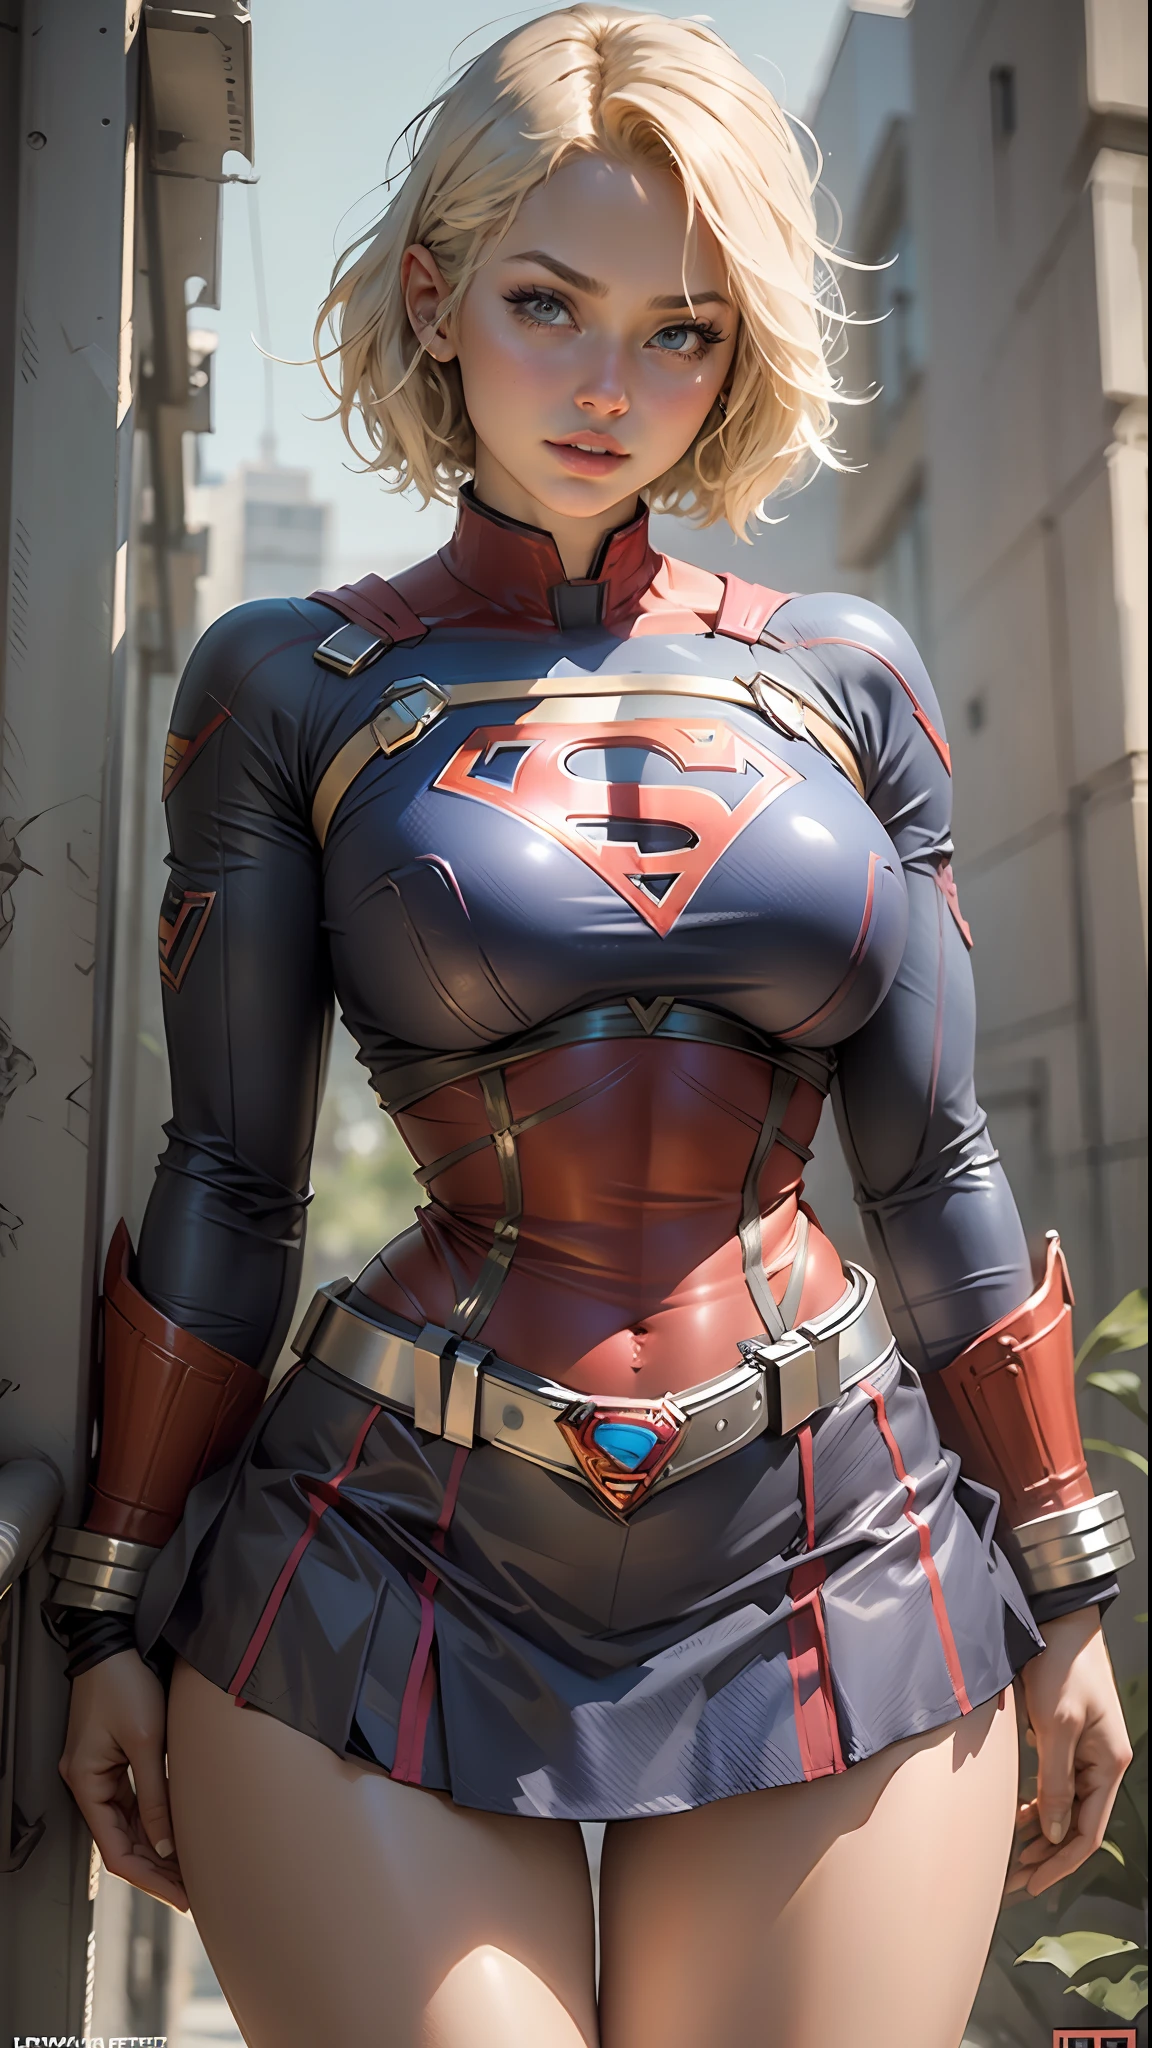 Mulher bonita, cabelo curto, corpo definido, seios grandes, coxas grandes usando um cosplay de Supergirl